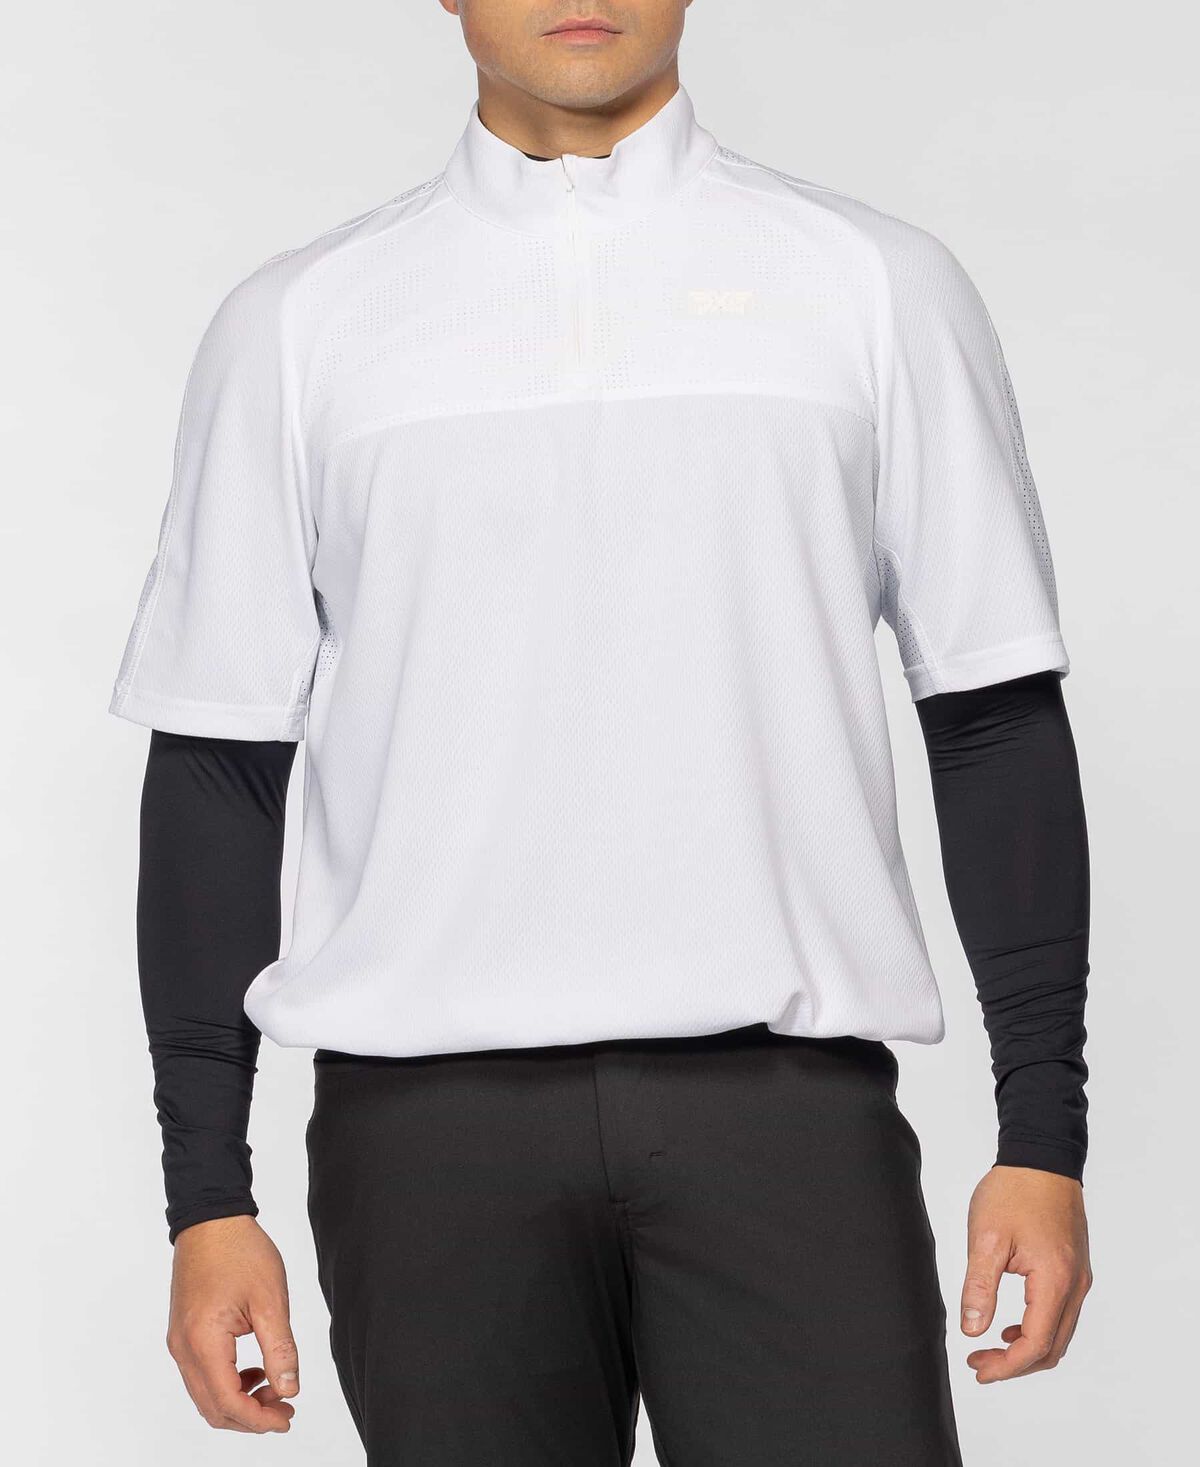 Men's 1/4 Zip Short Sleeve Anorak - White - 2X-Large 